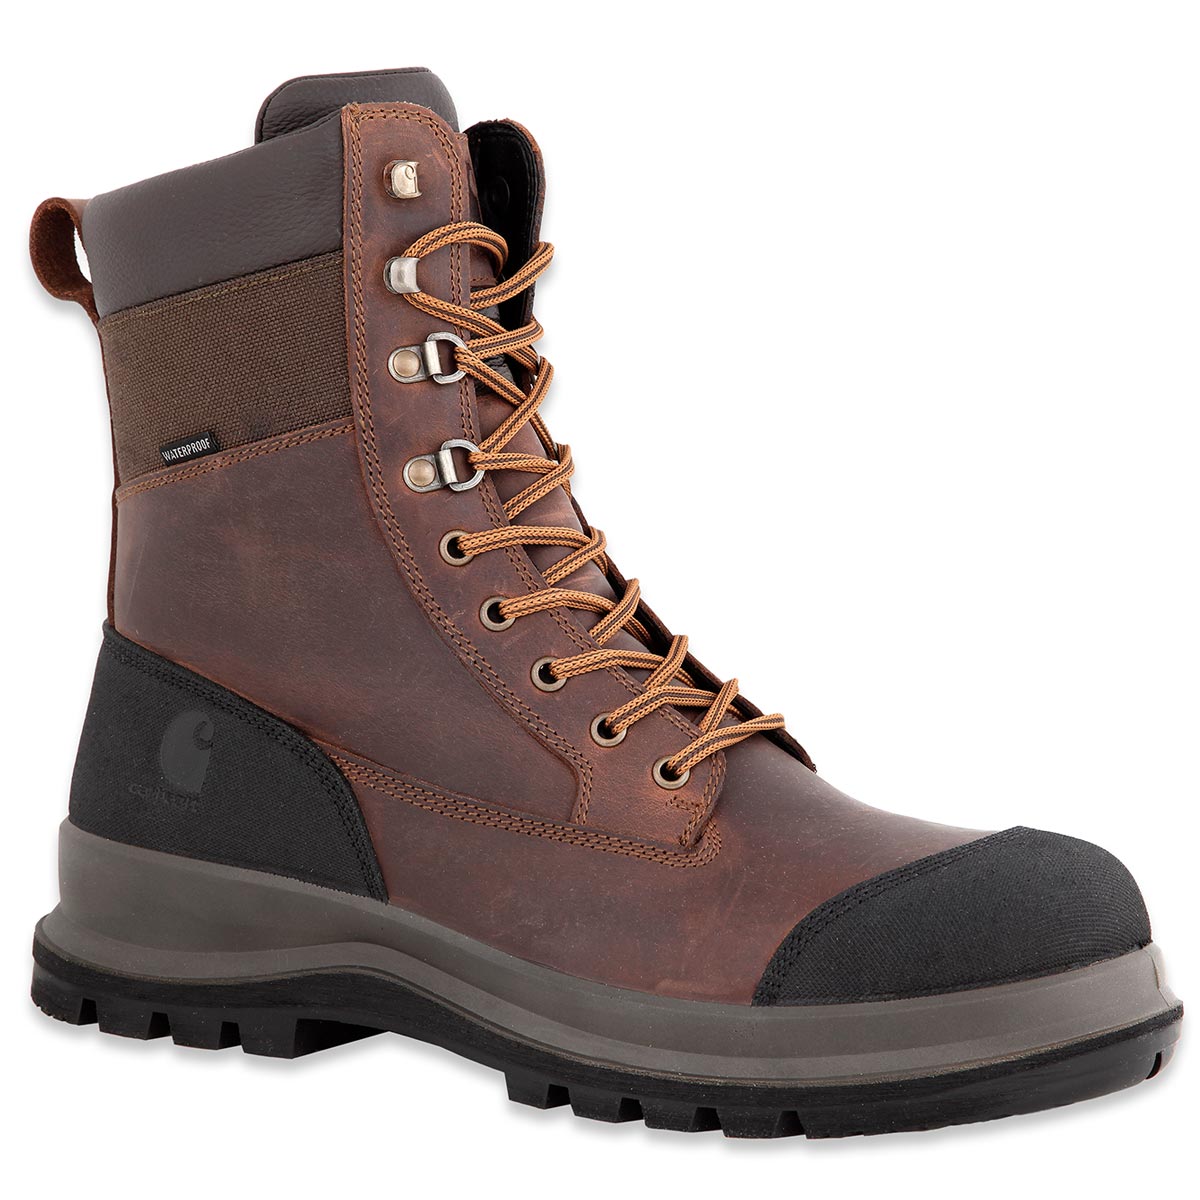 Carhartt Detroit Winter Work Boots S3 waterproof brown